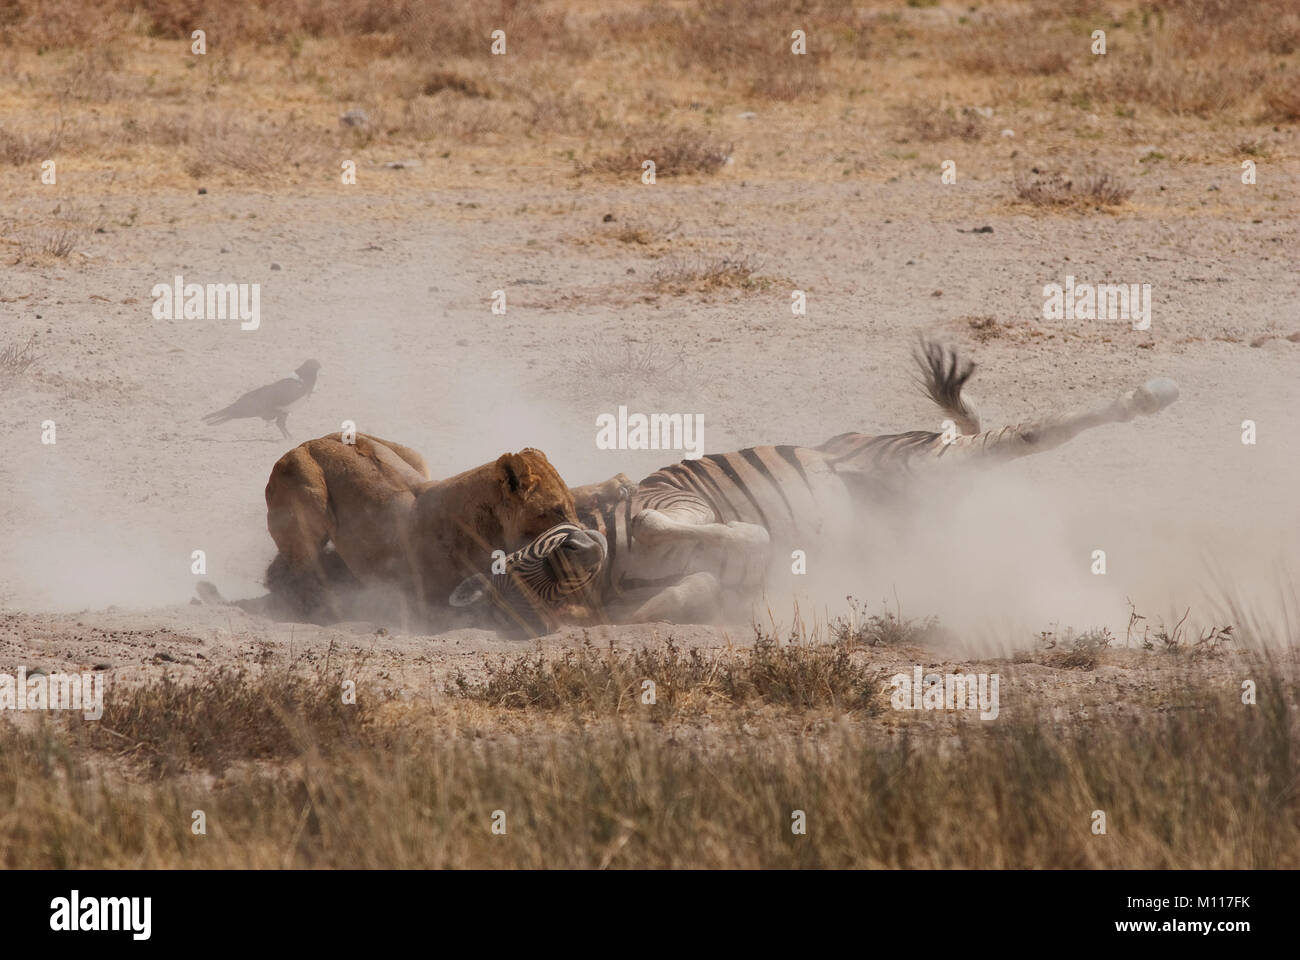 Lioness (Panthera leo) killing zebra at Salvadora waterhole, Etosha National Park, Namibia Stock Photo